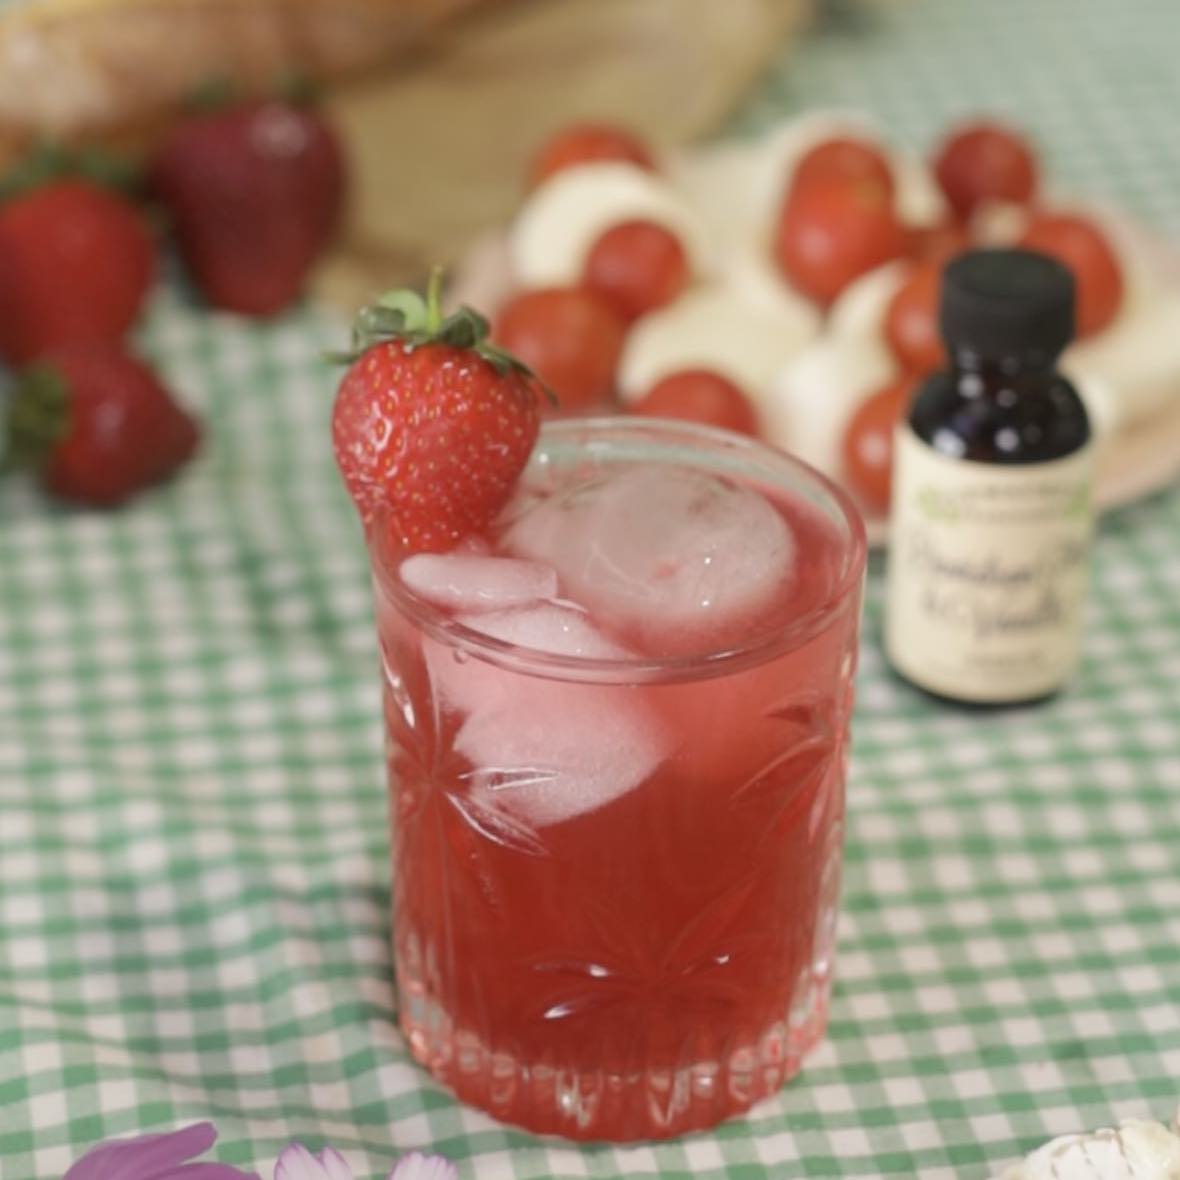 Davidson plum and vanilla shrub soda with strawberry garnish